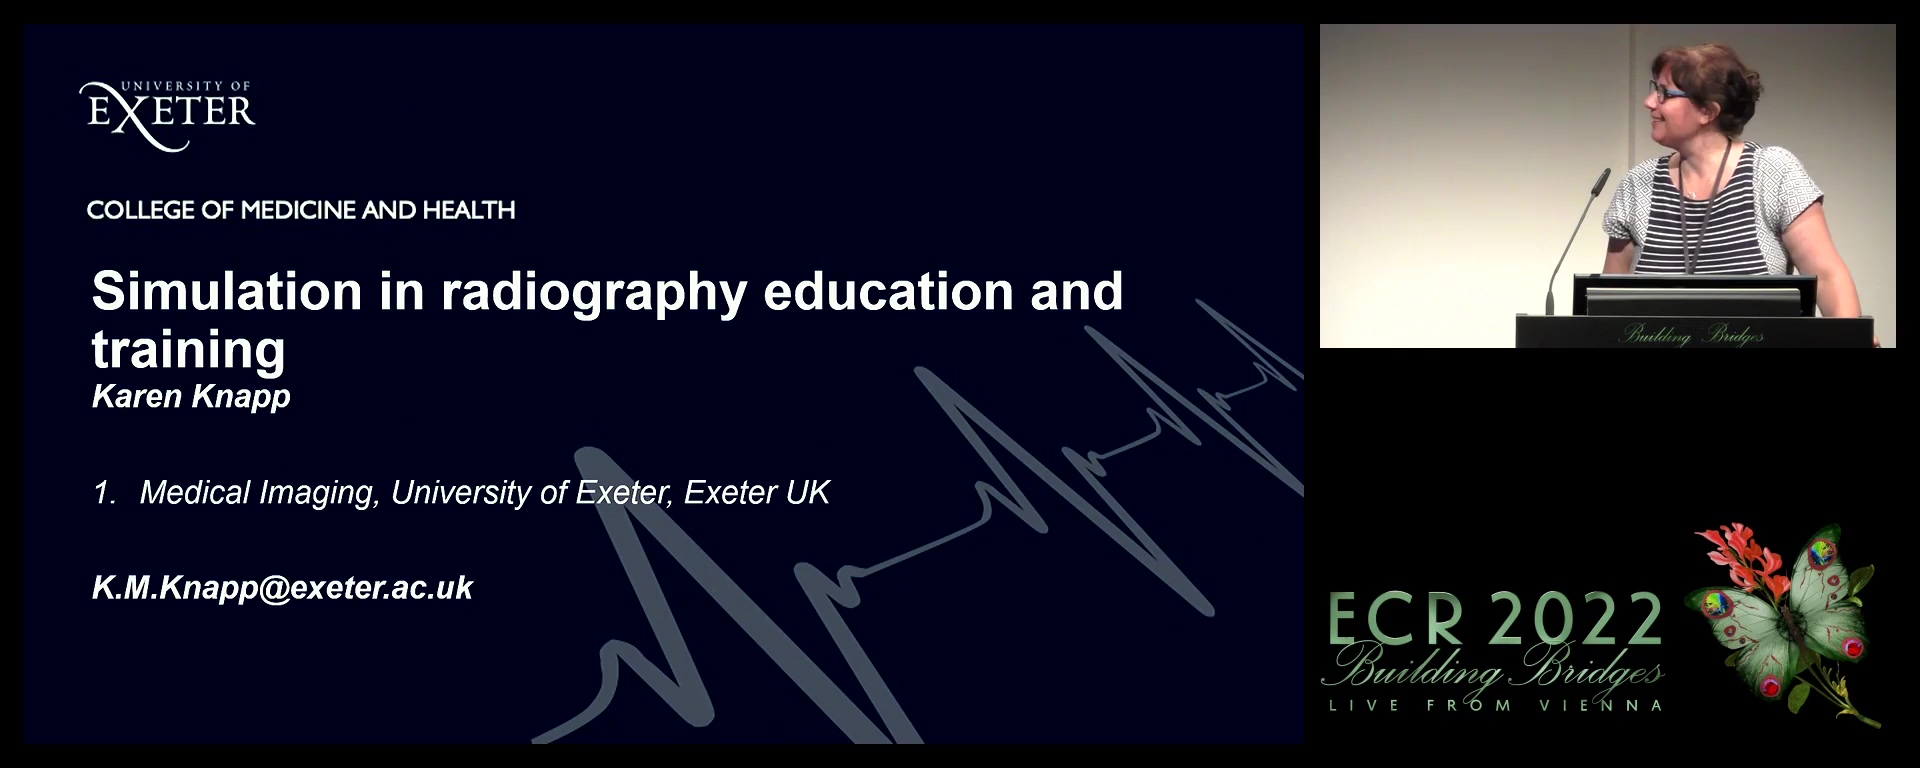 Educational impact for radiography - Karen Knapp, Exeter / UK